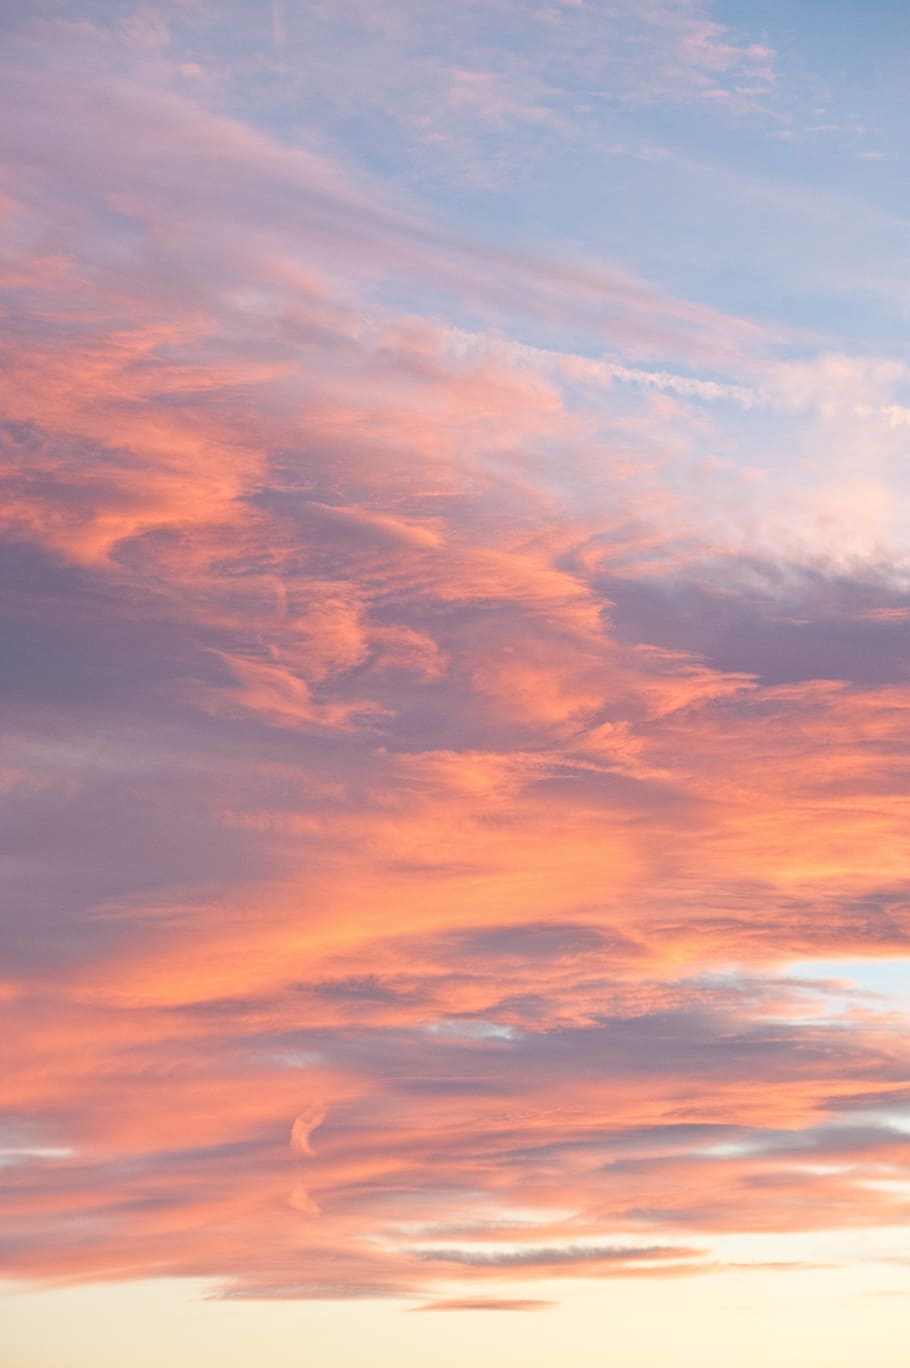 cumulus nimbus clouds, clouds, sunrise, sky, nature, red, pink, sky clouds, colorful, cloud - sky